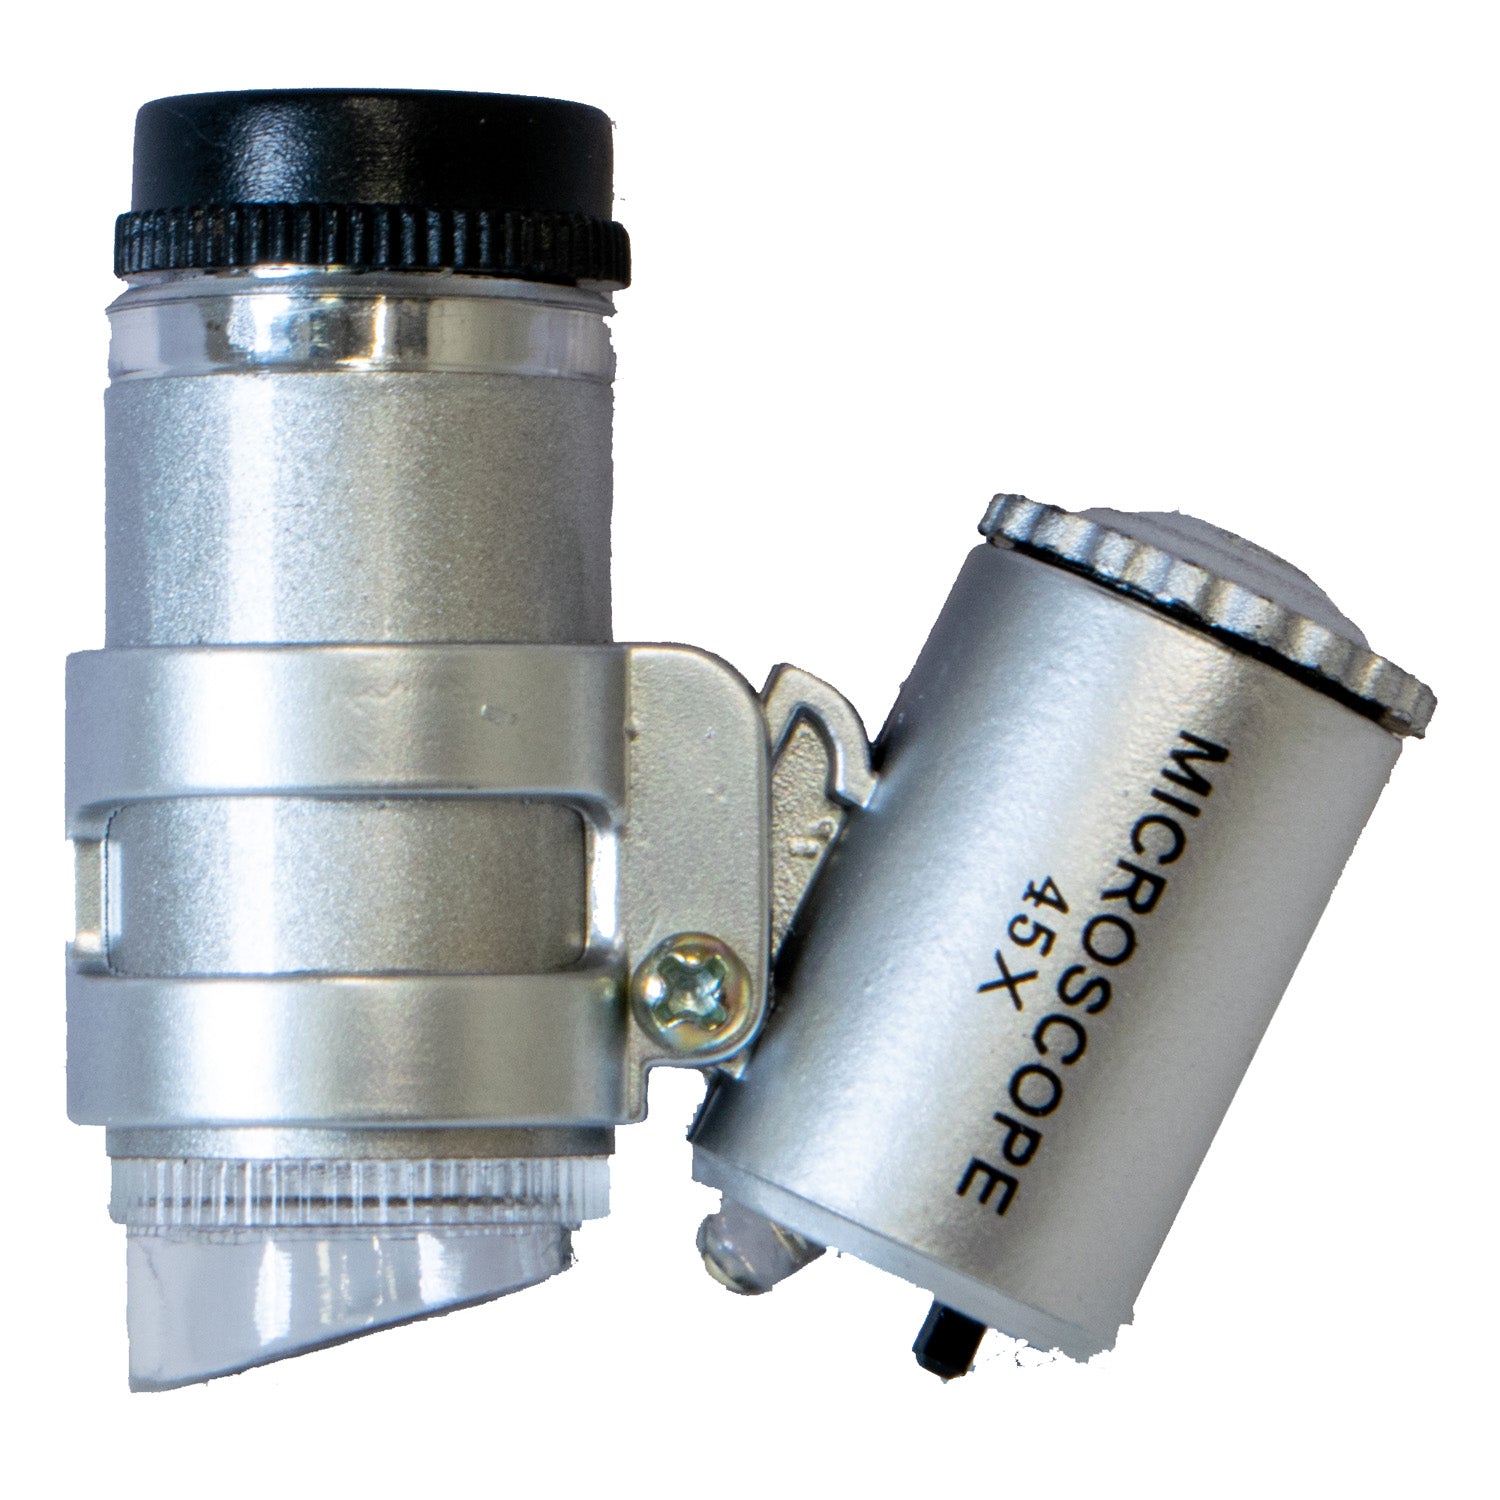 Pocket microscope, 45X (lightmag)